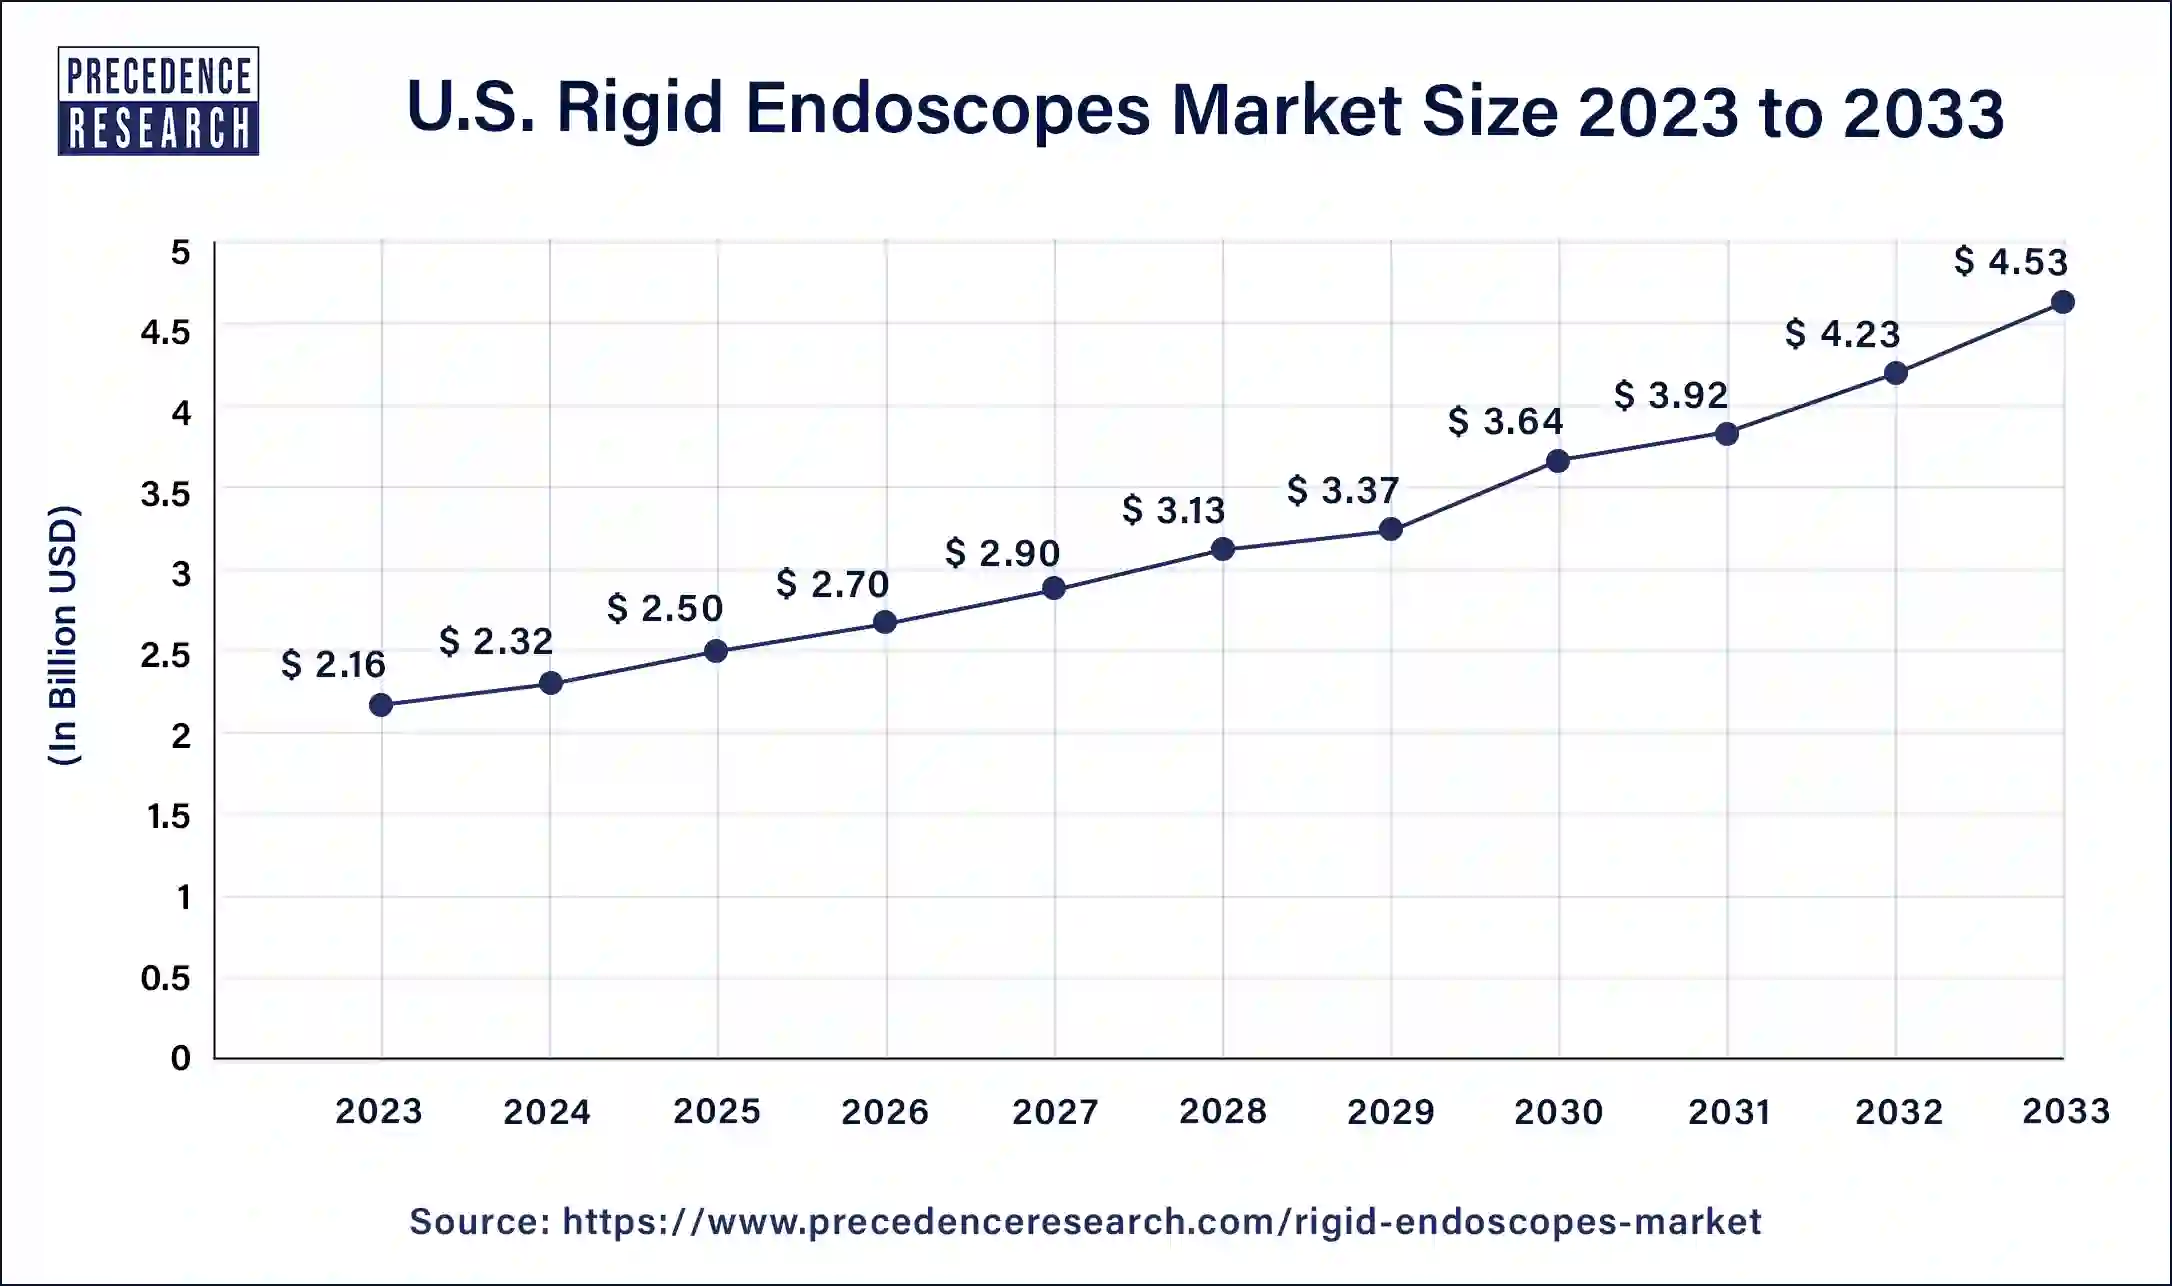 U.S. Rigid Endoscopes Market Size 2024 to 2033